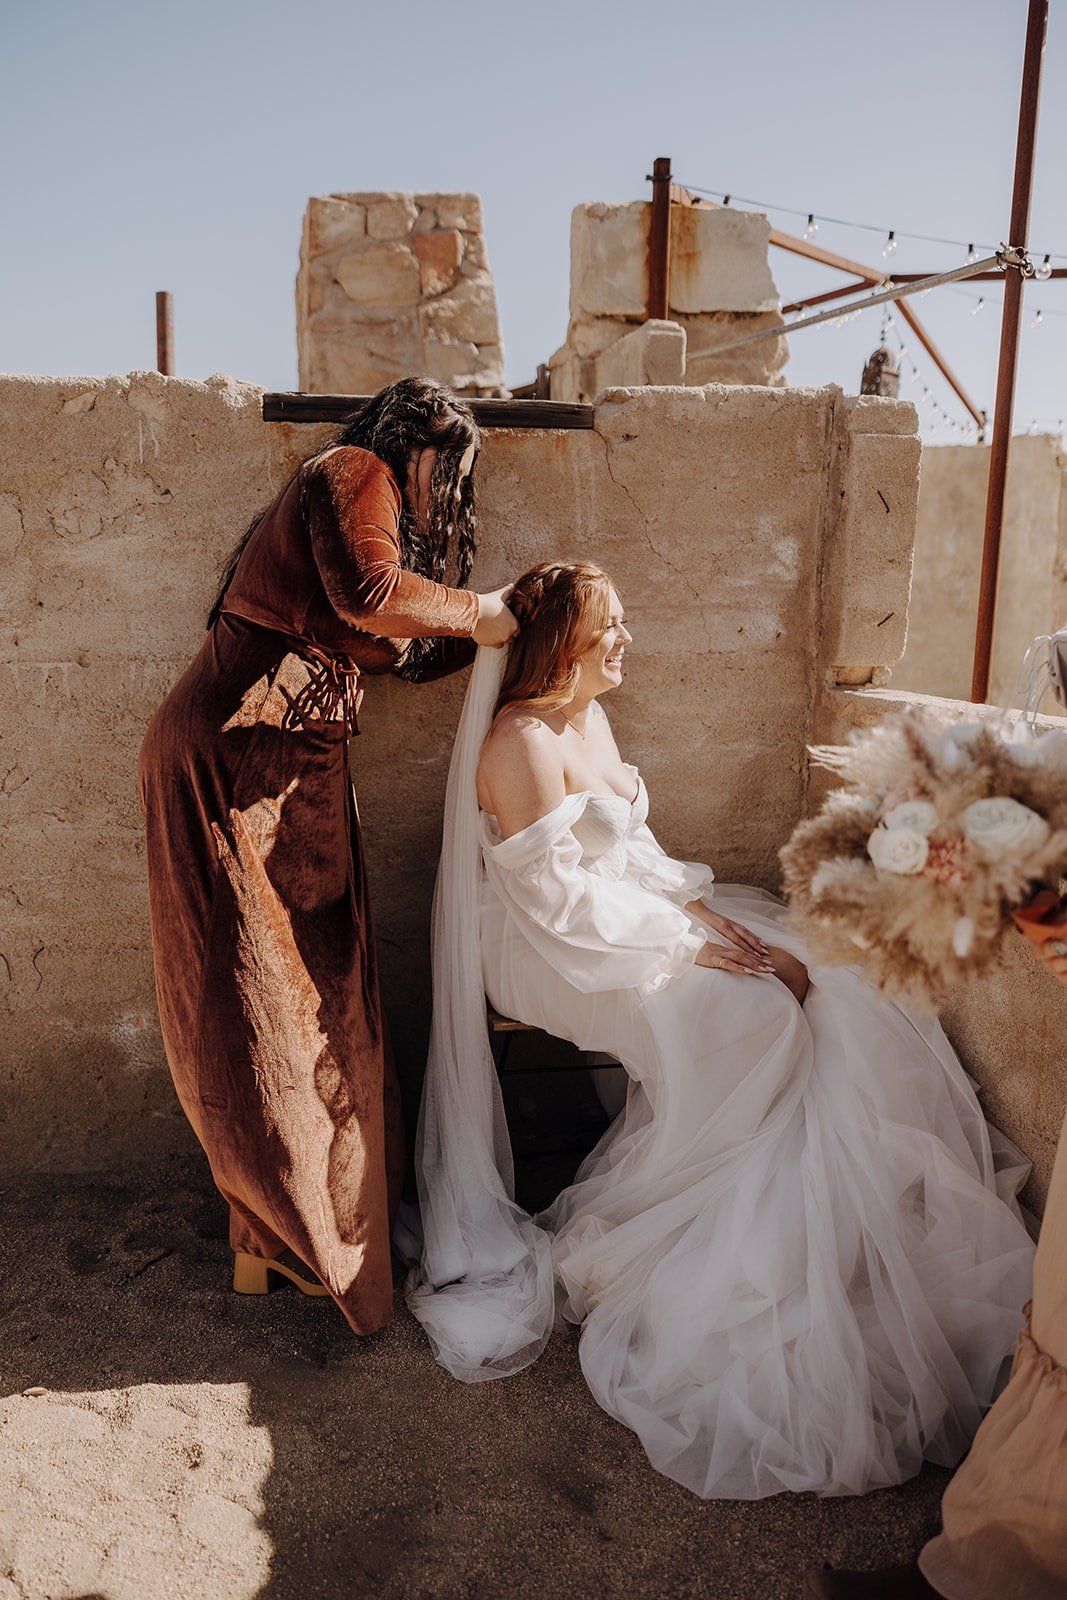 Bridesmaid helping bride with veil before wedding ceremony at The Ruin Venue in Joshua Tree